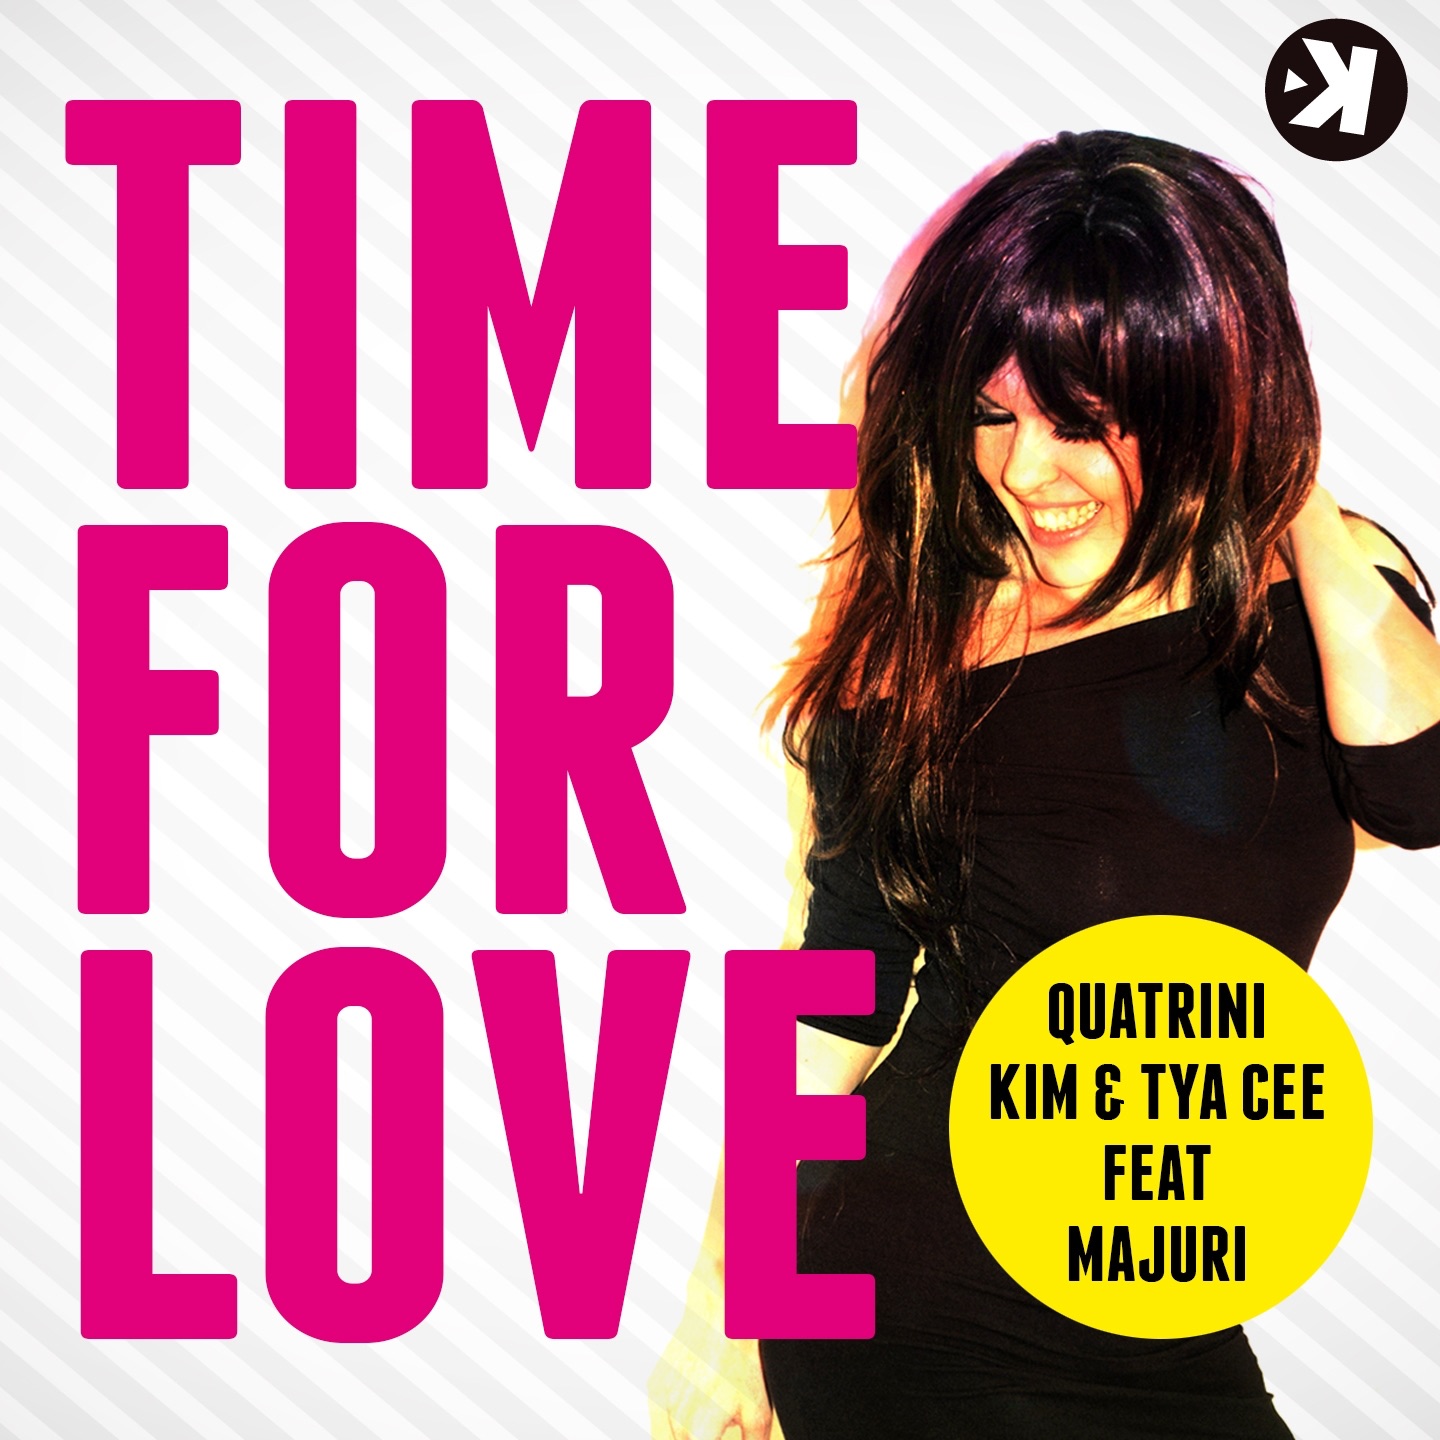 Quatrini Kim & Tya Cee feat. Majuri - Time for Love (Scaia & Kim Club Mix)